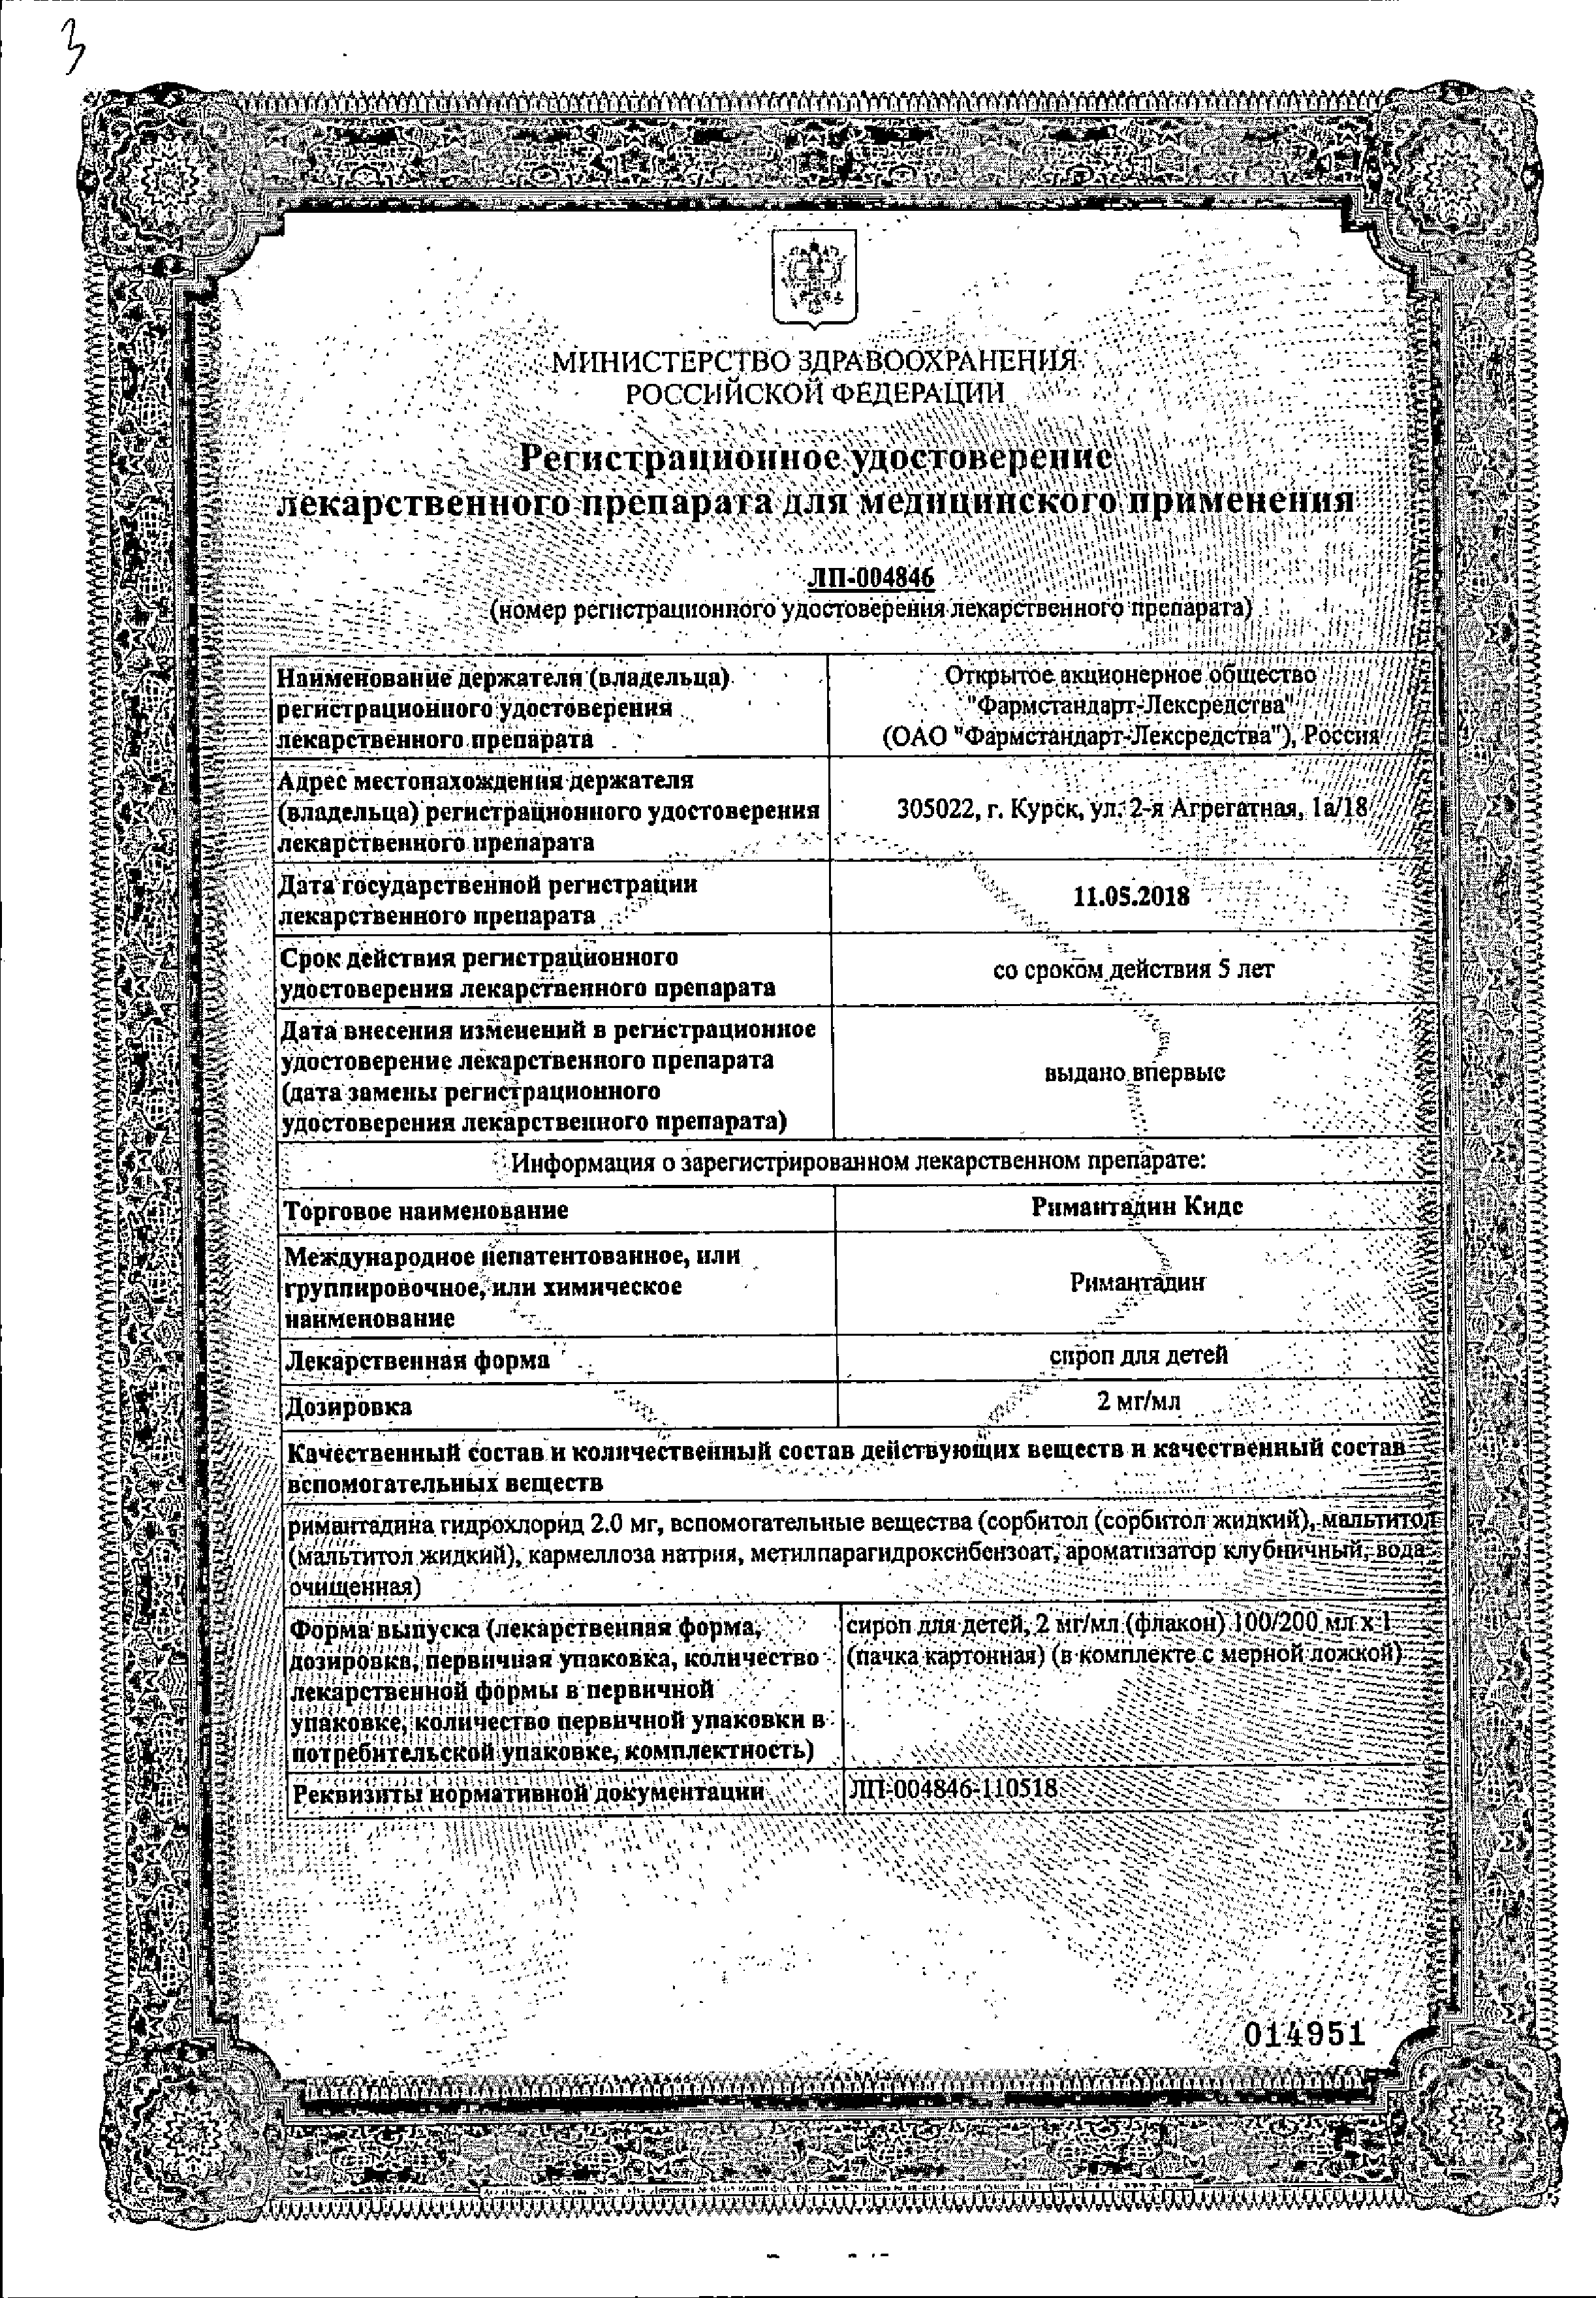 Римантадин Кидс сертификат